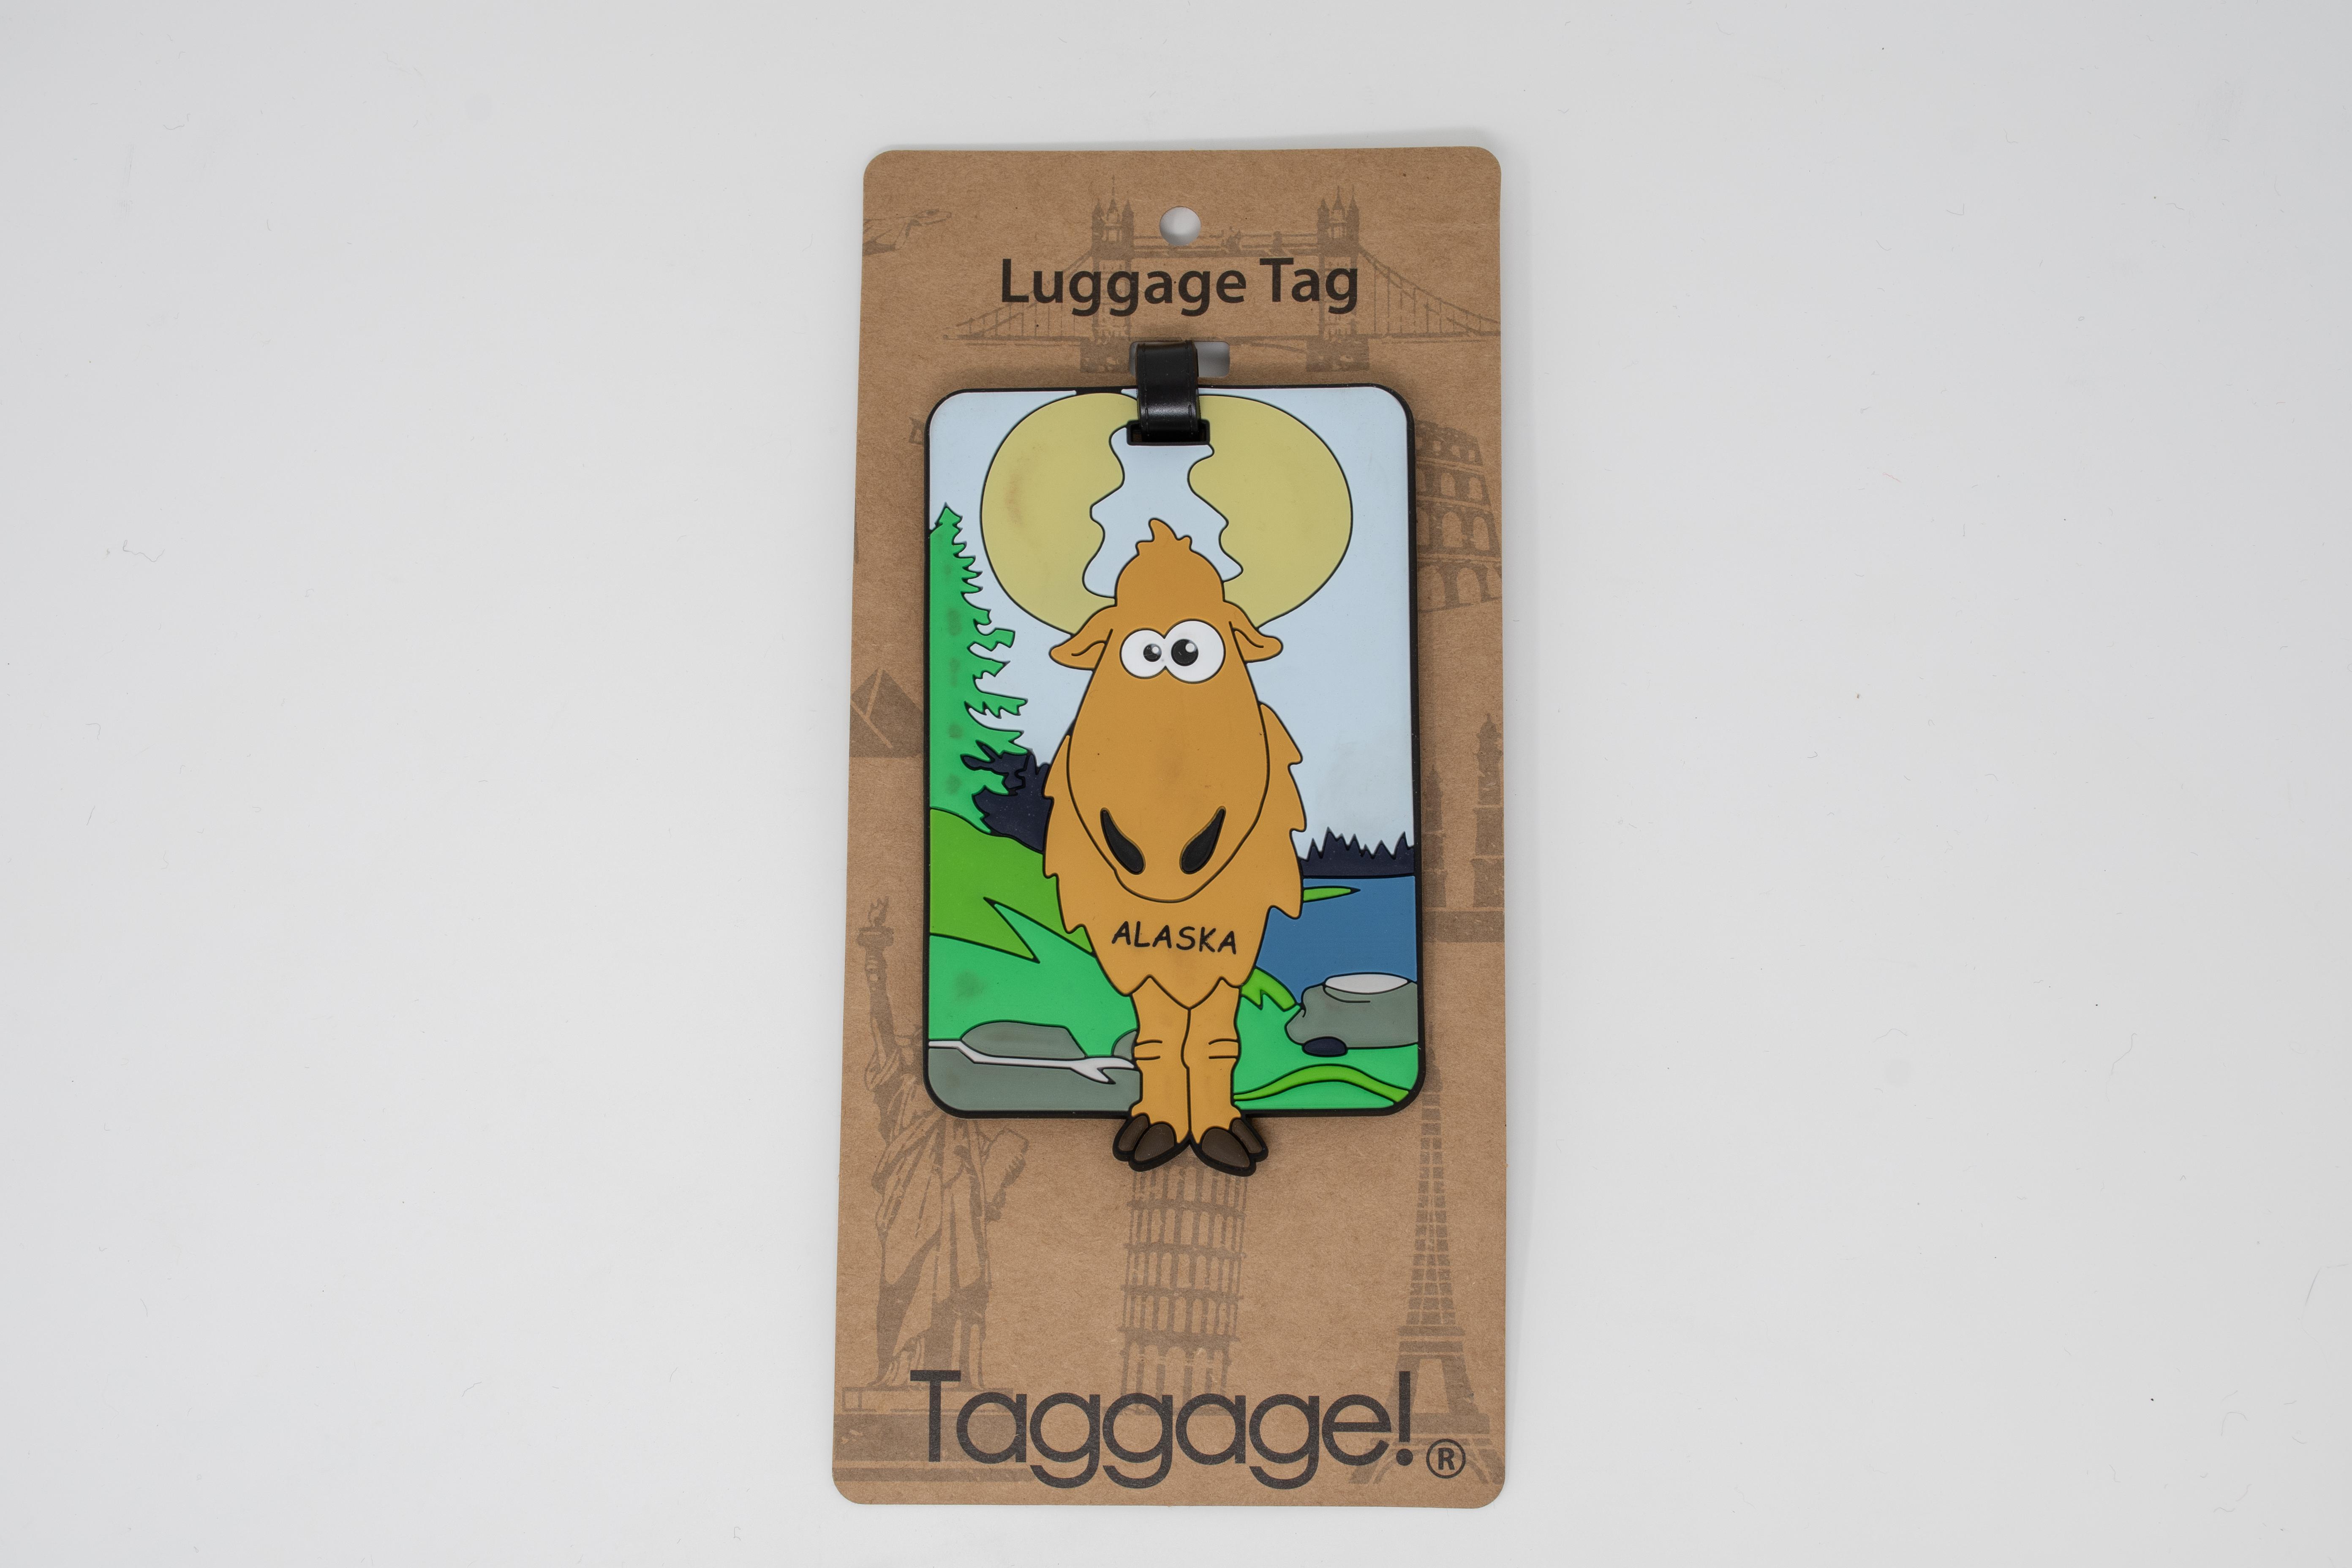  Luggage Tag - Lg Square Moose